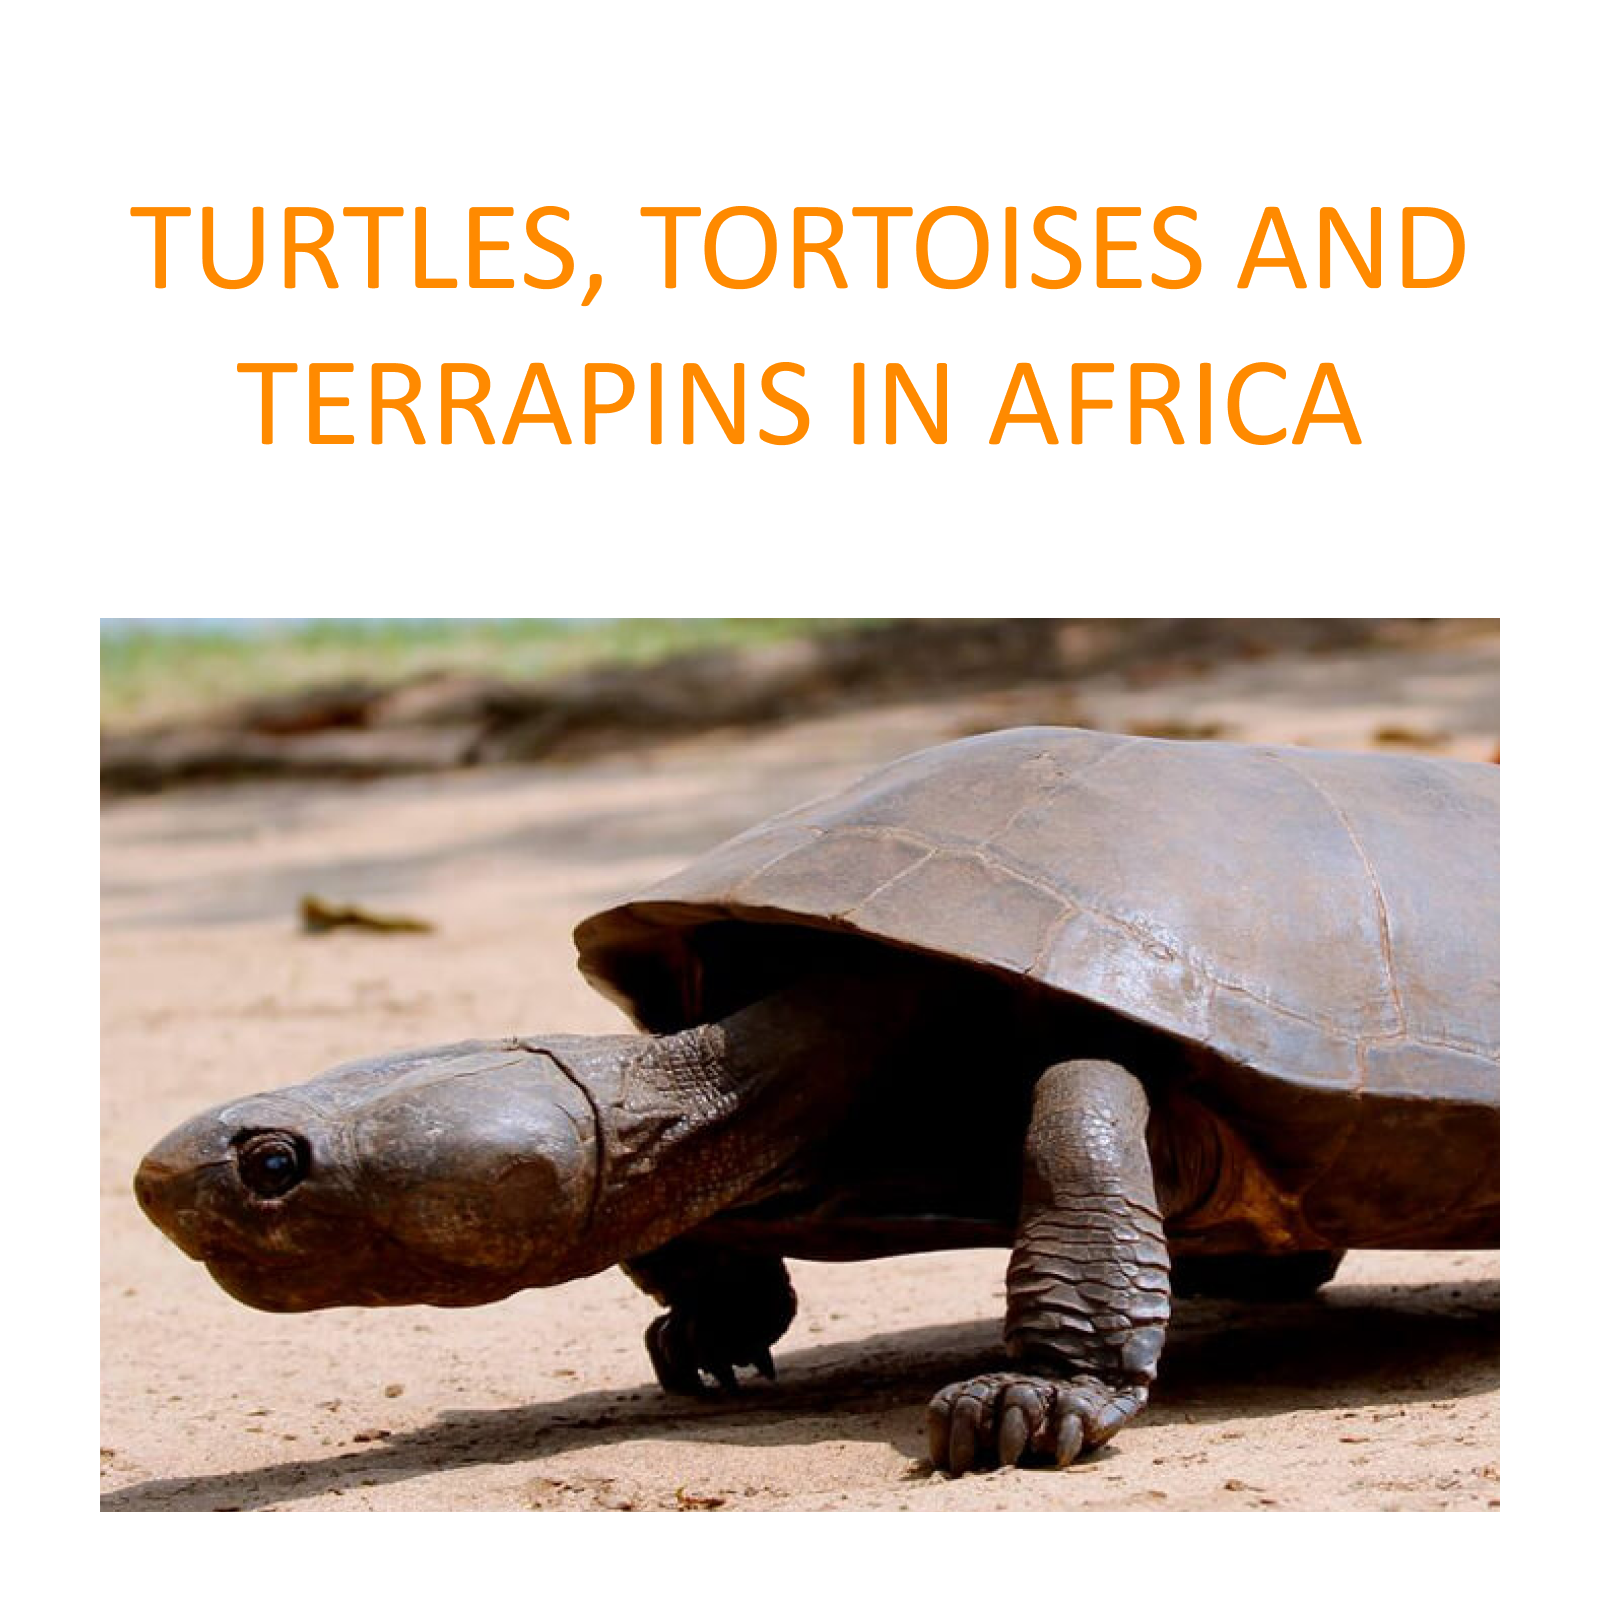 Turtles, tortoises and terrapins